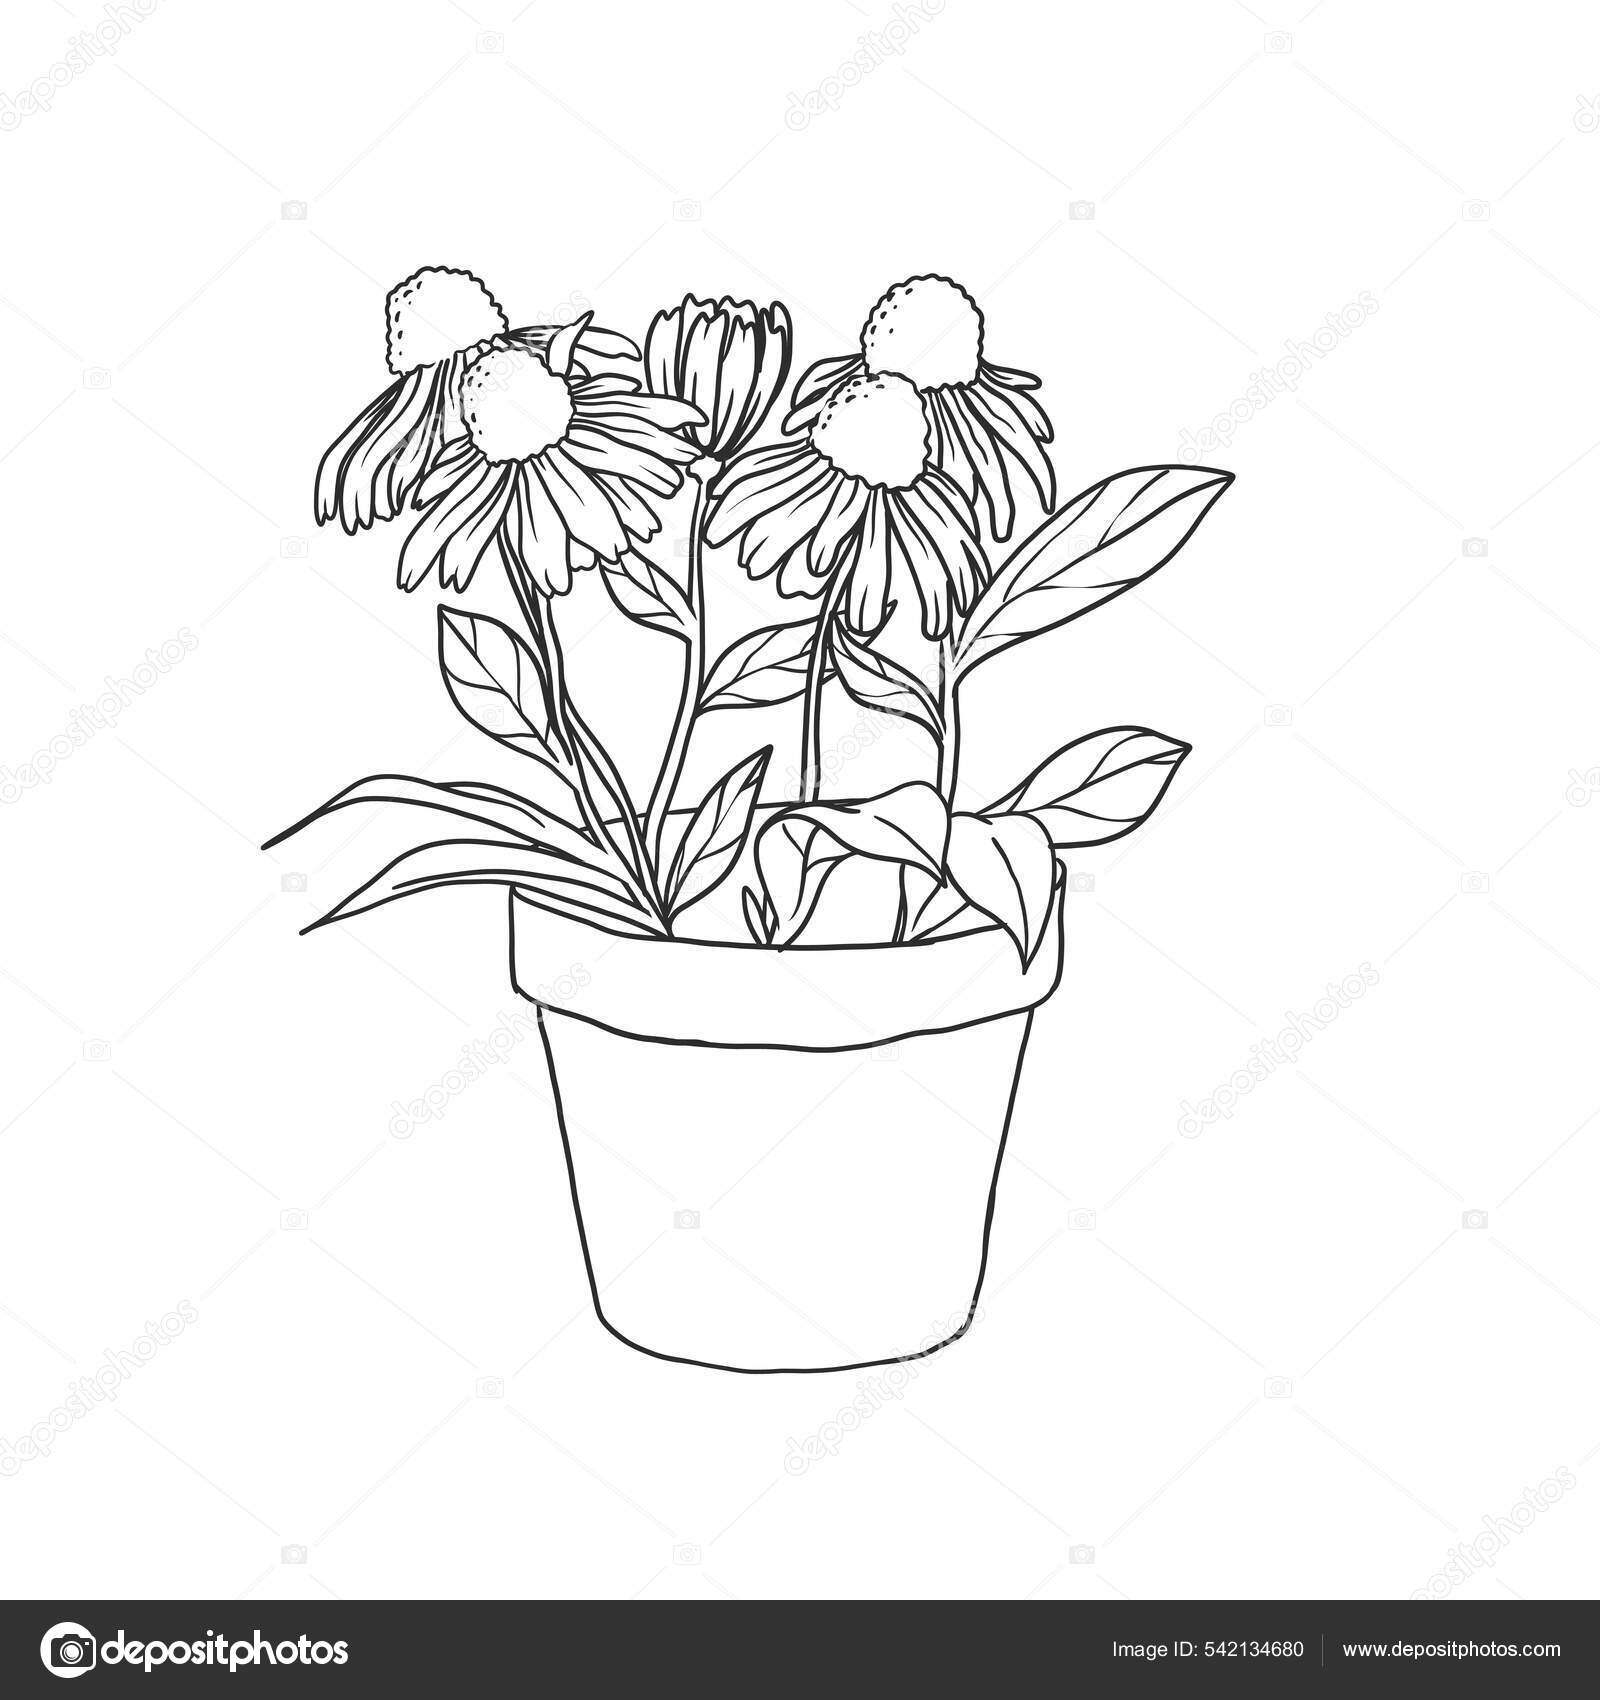 Flower Pot Drawing Stock Photos - 92,976 Images | Shutterstock